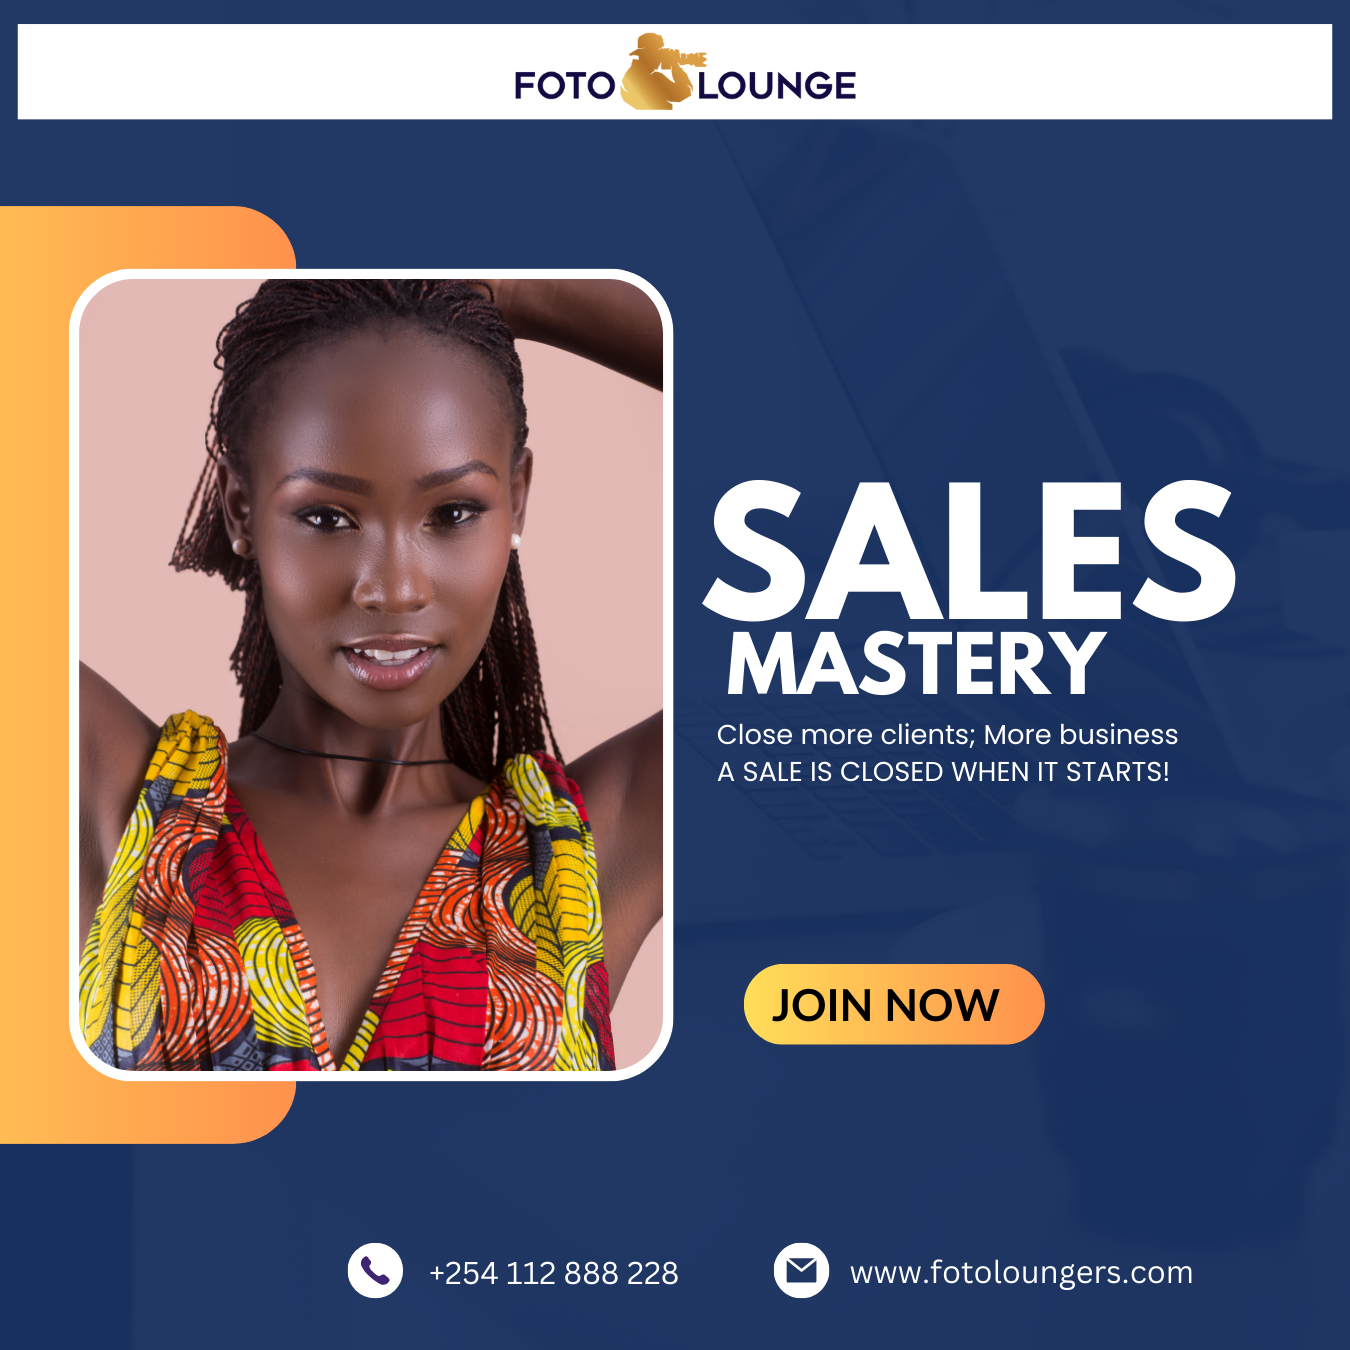 Master sales to close more deals